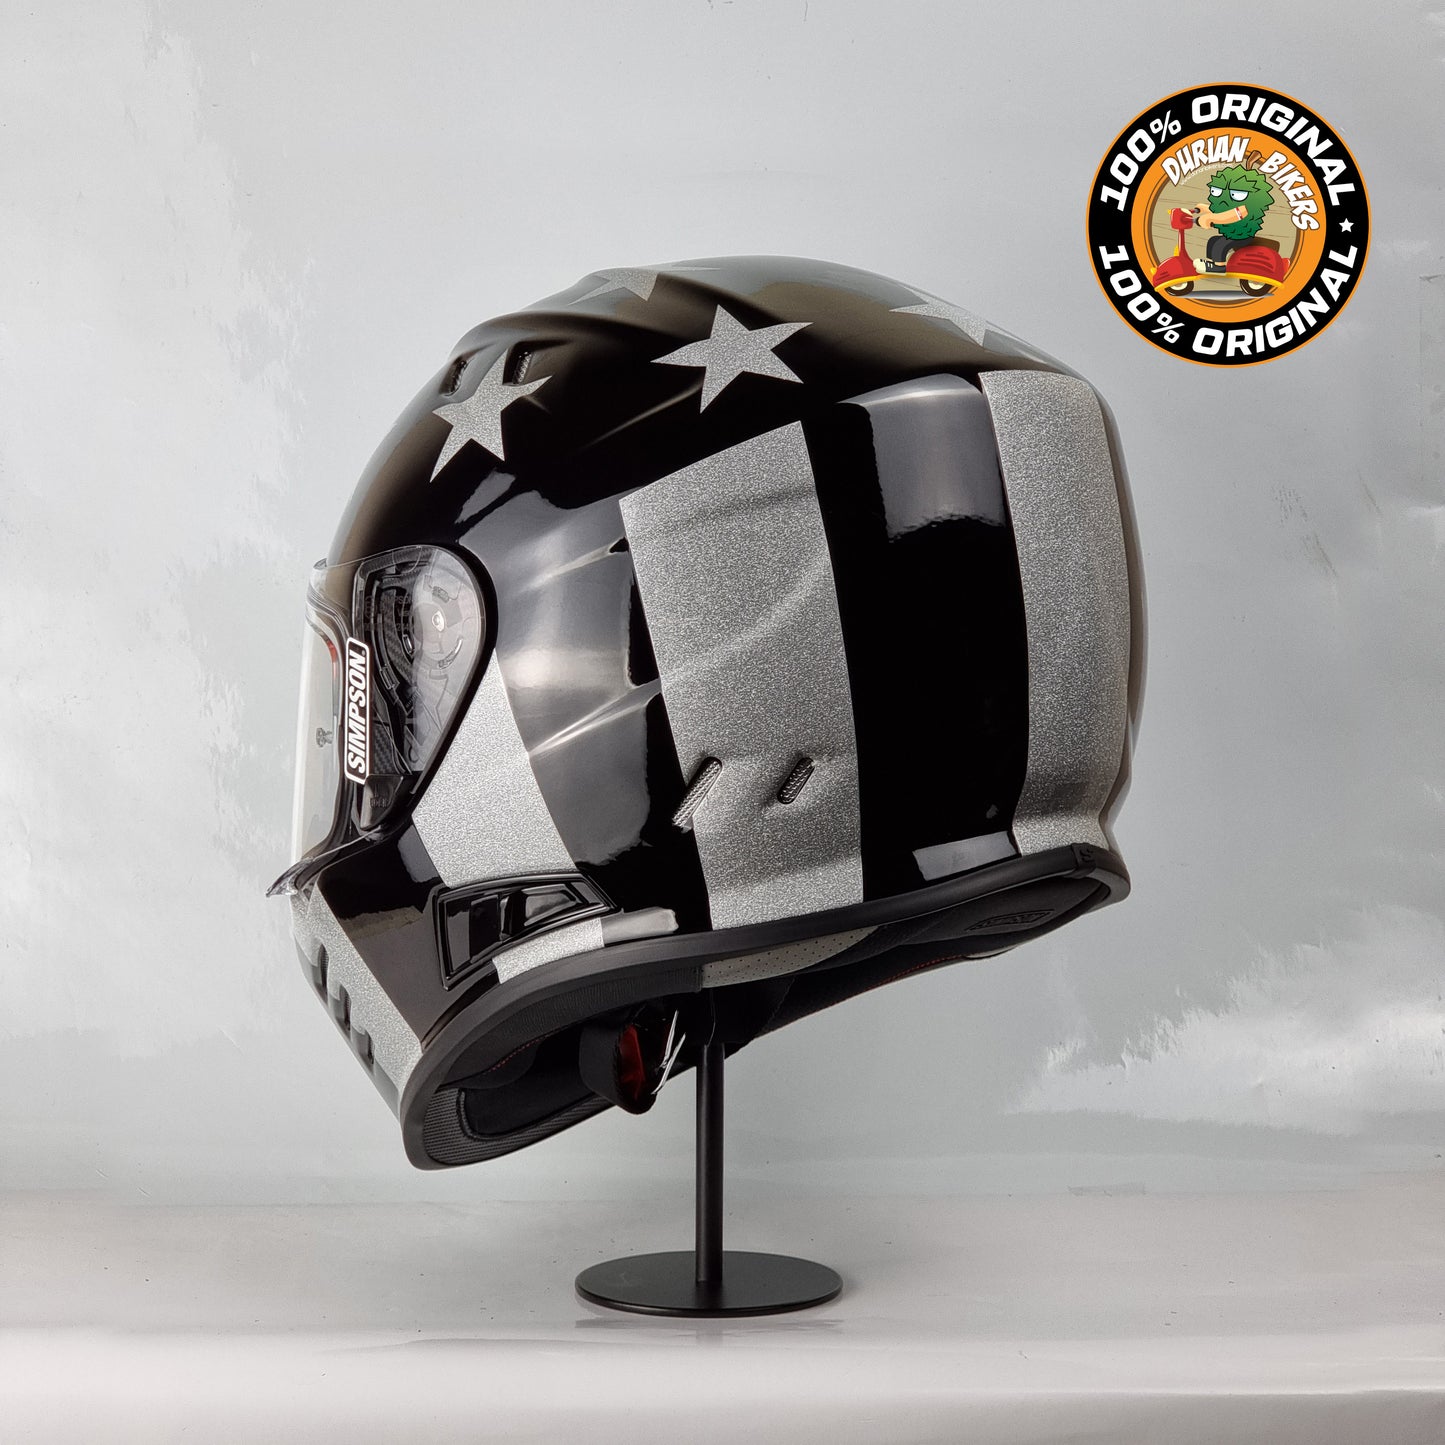 Simpson Helmet Venom Bandit (Sting Rae)